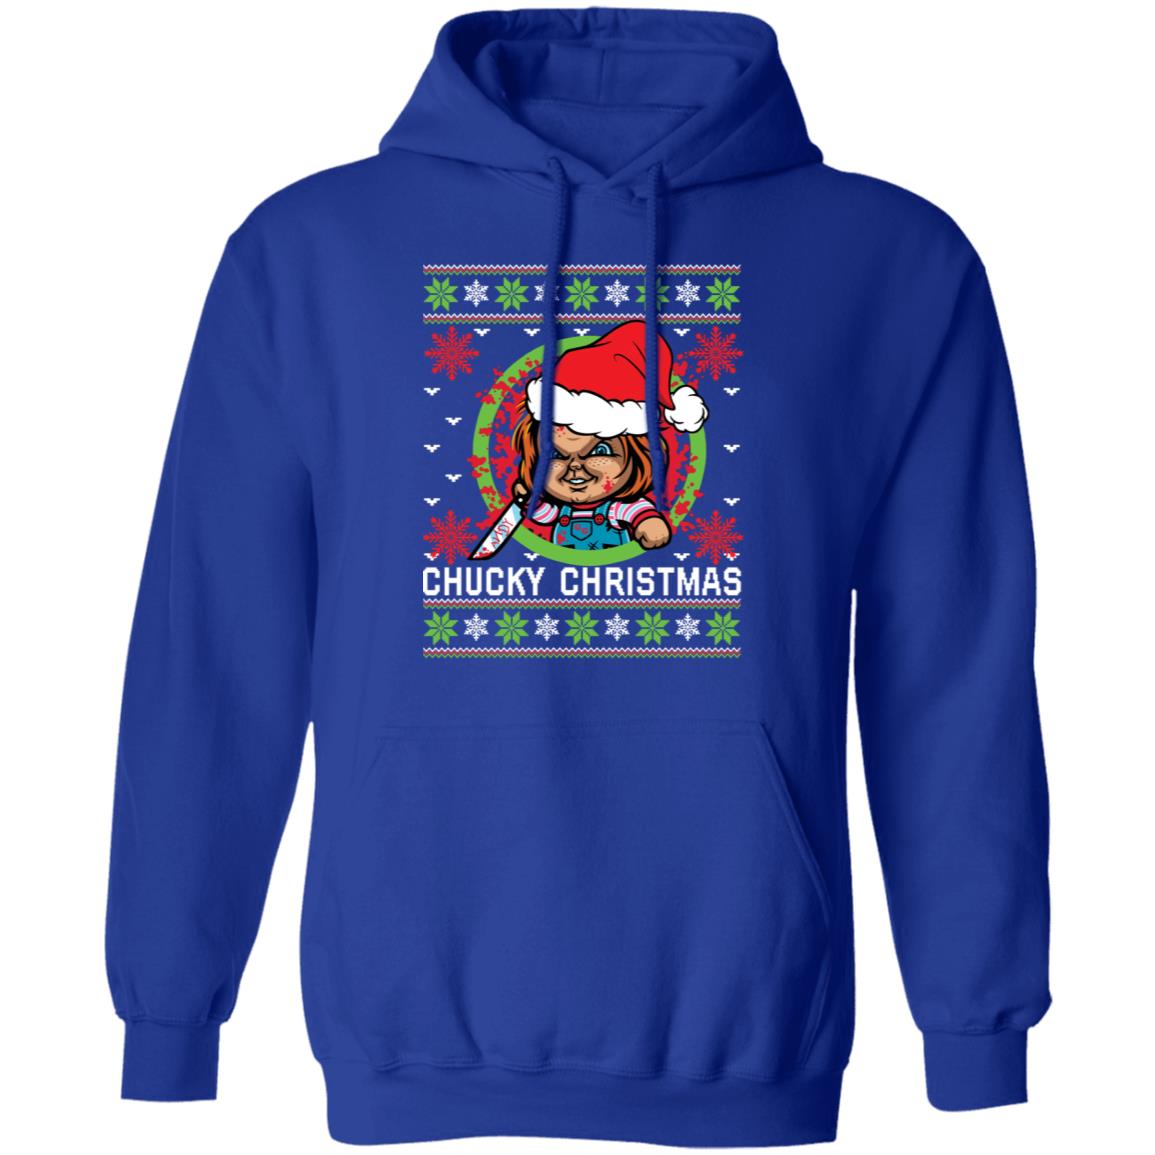 Chucky Christmas sweater - Rockatee